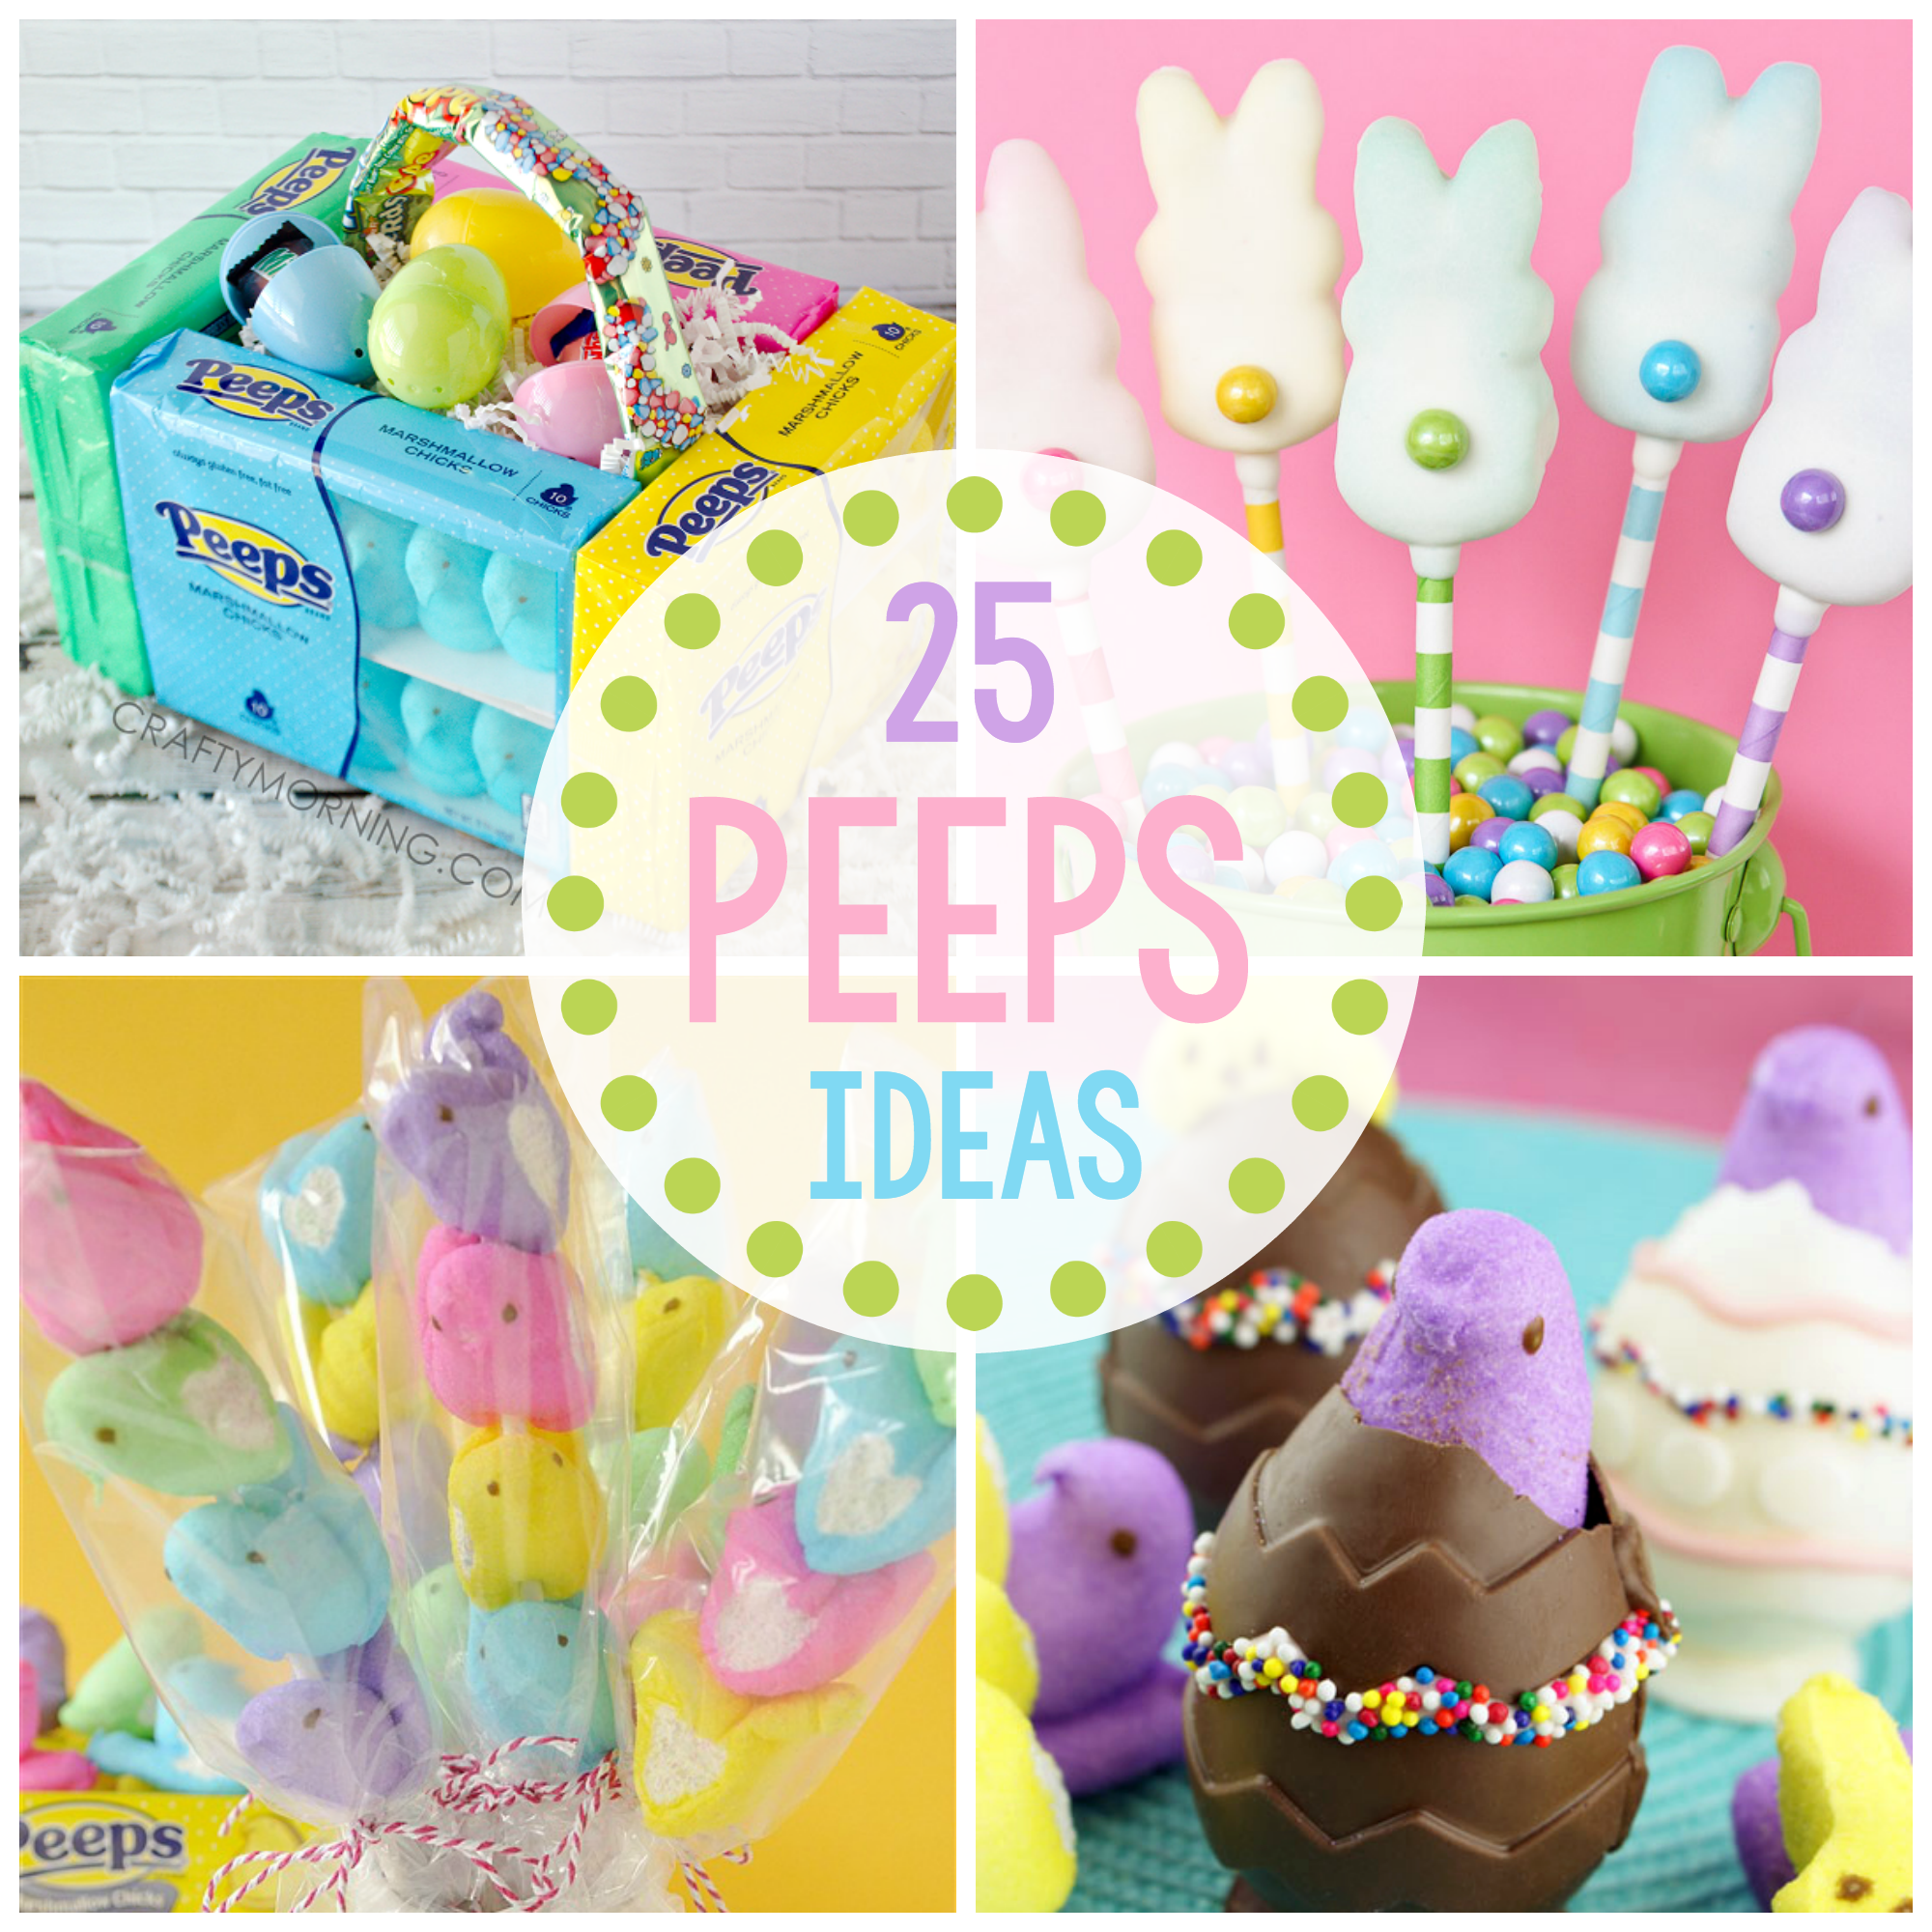 25 Fun Peeps Ideas for Easter